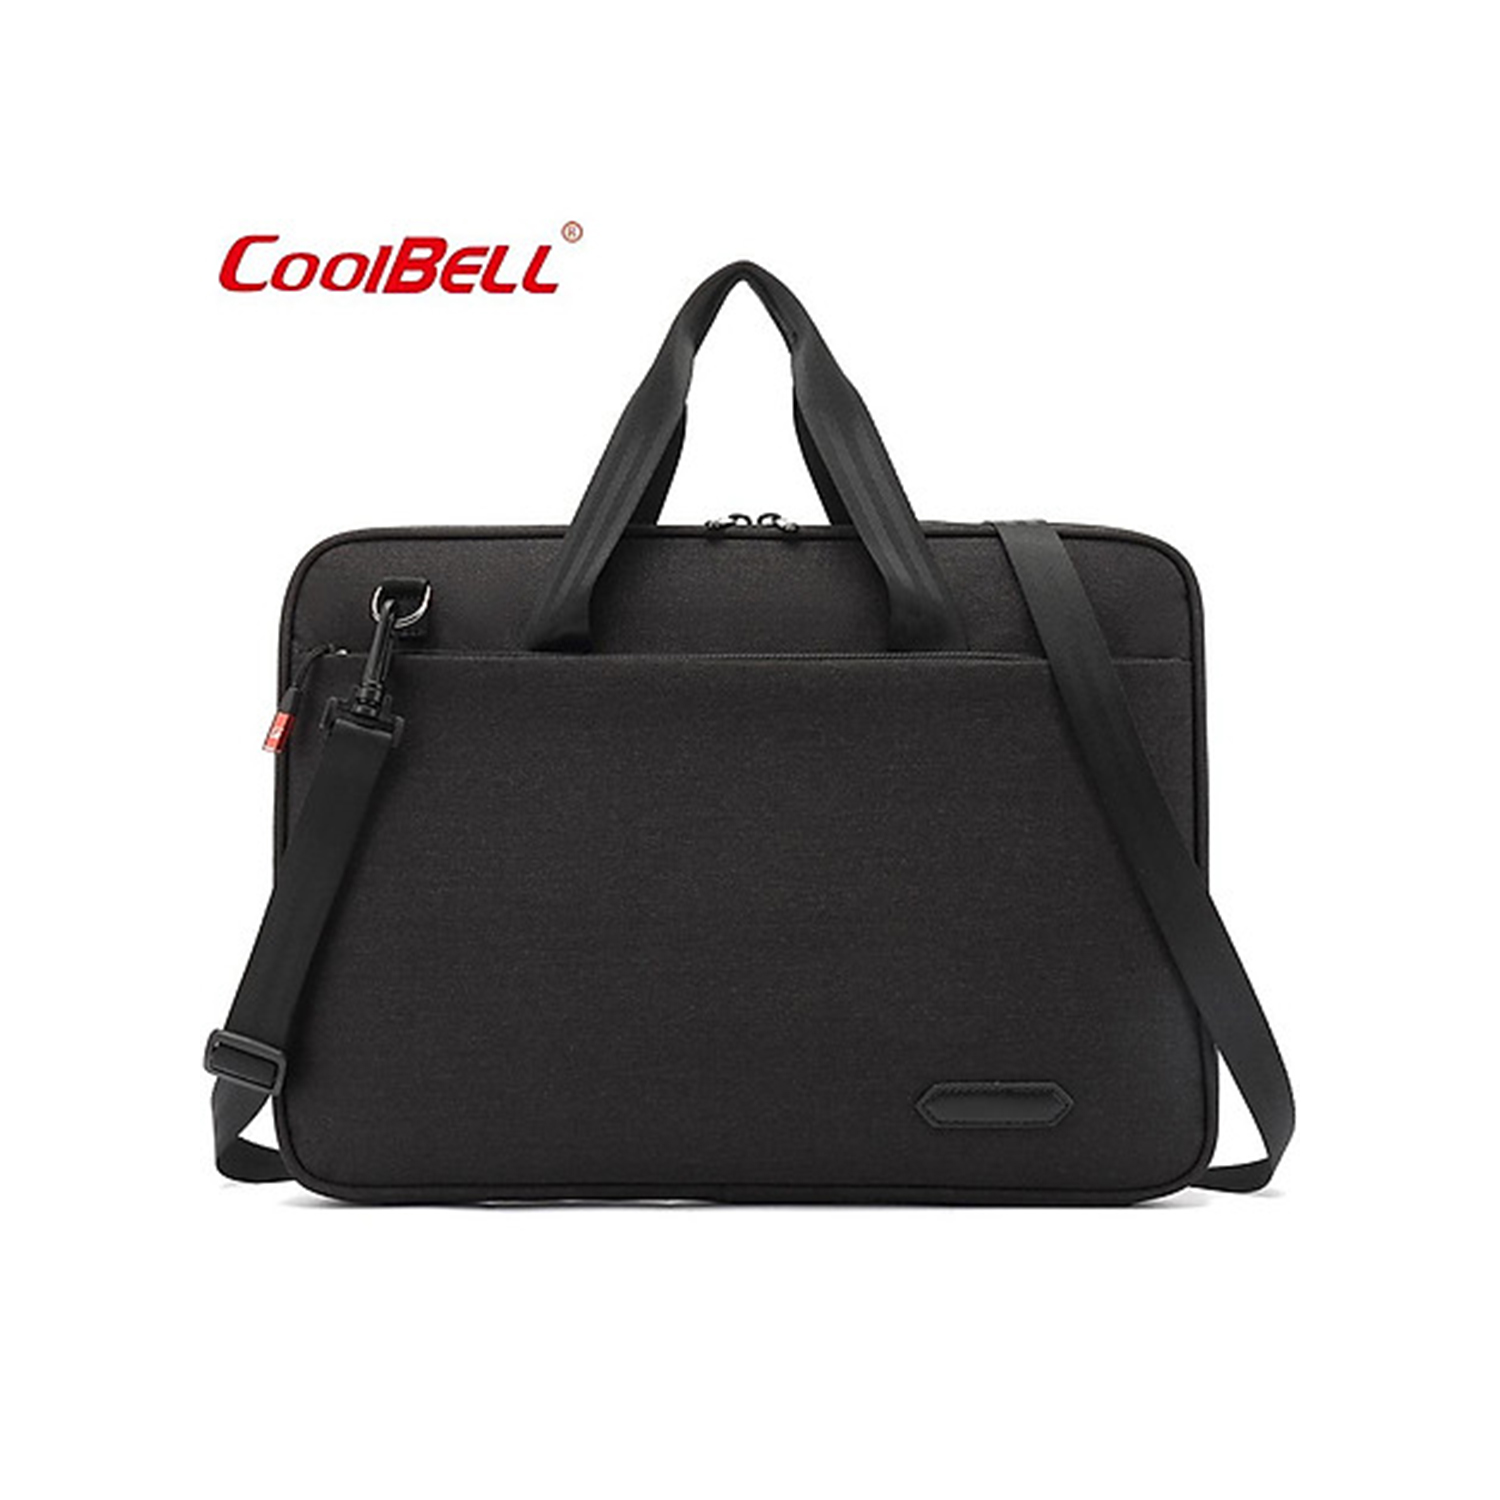 Coolbell CB-2111 Laptop Bag Price in Pakistan